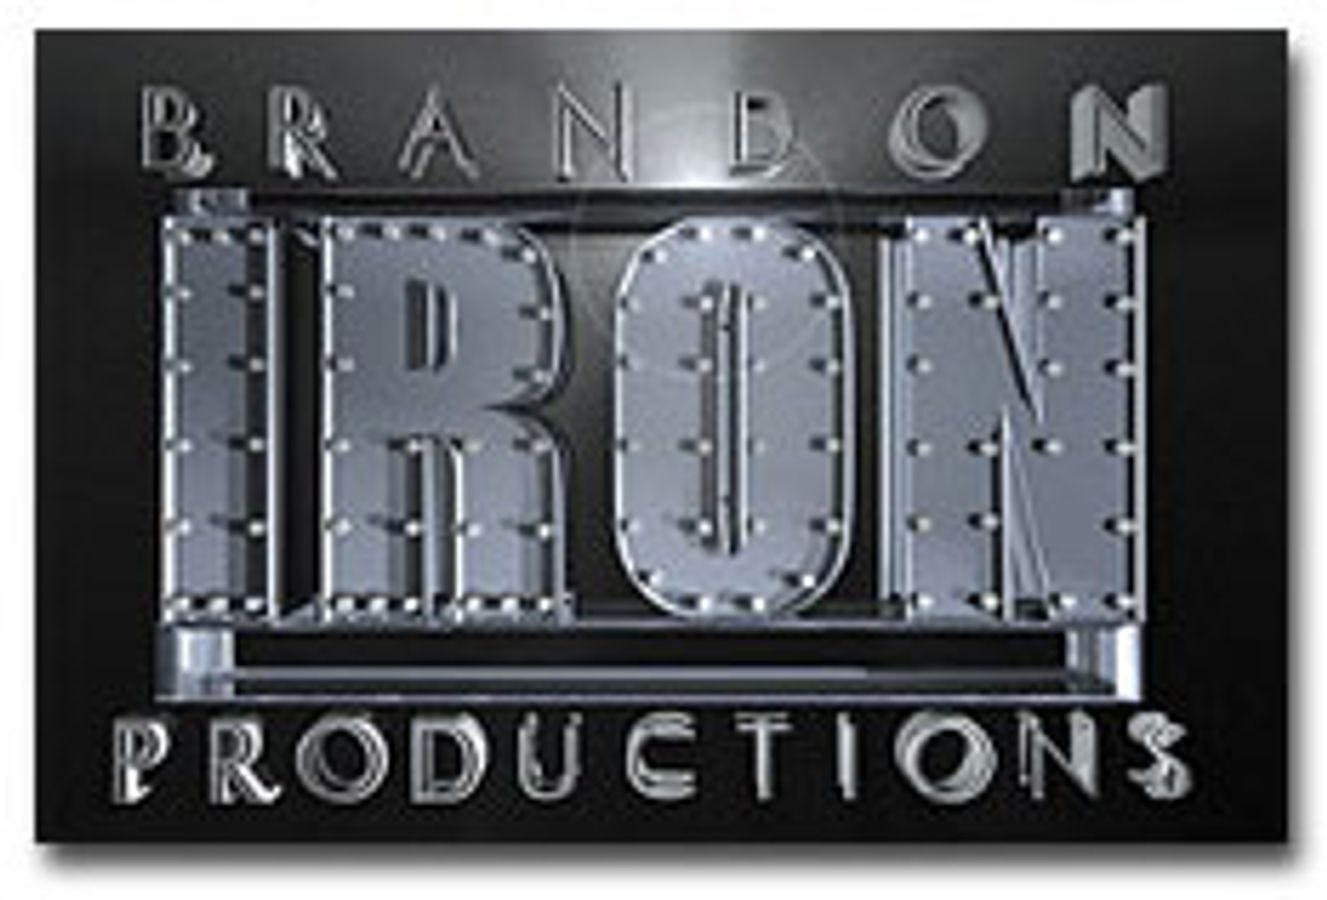 Brandon Iron Productions